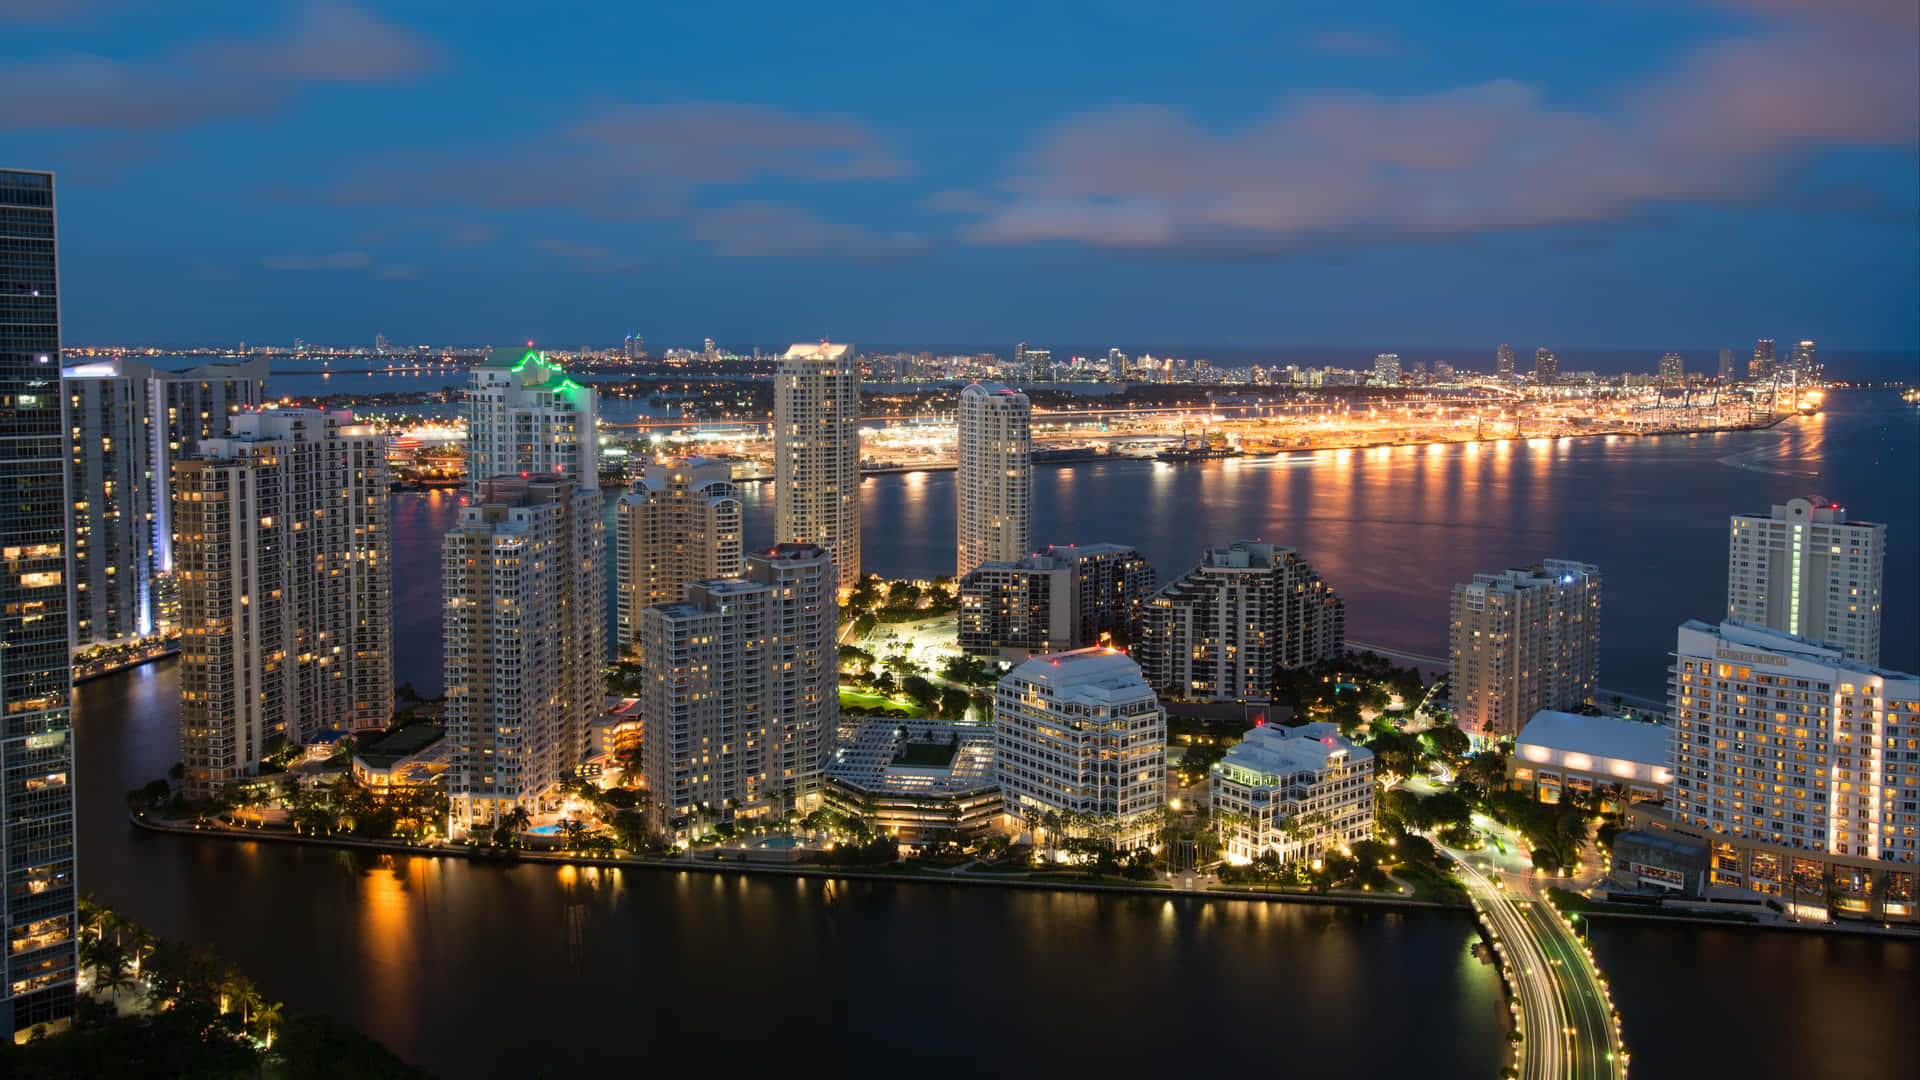 "Enjoy a stunning aerial view of Miami's beautiful beachfront." Wallpaper